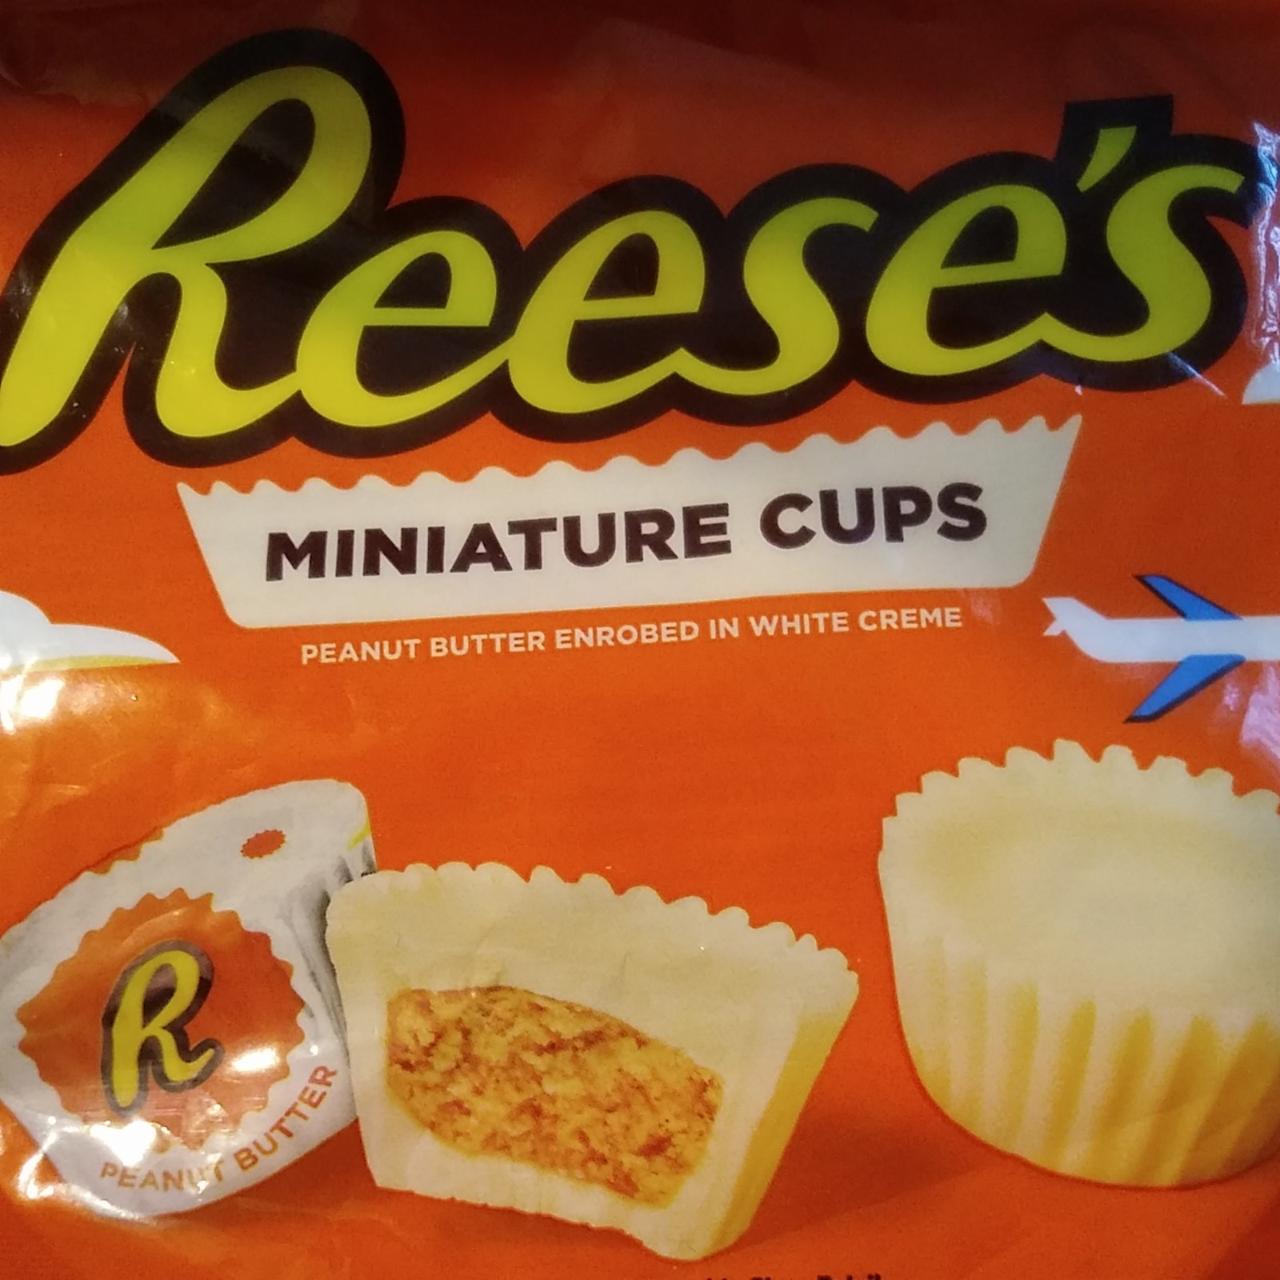 Zdjęcia - Reese's Miniature Cups